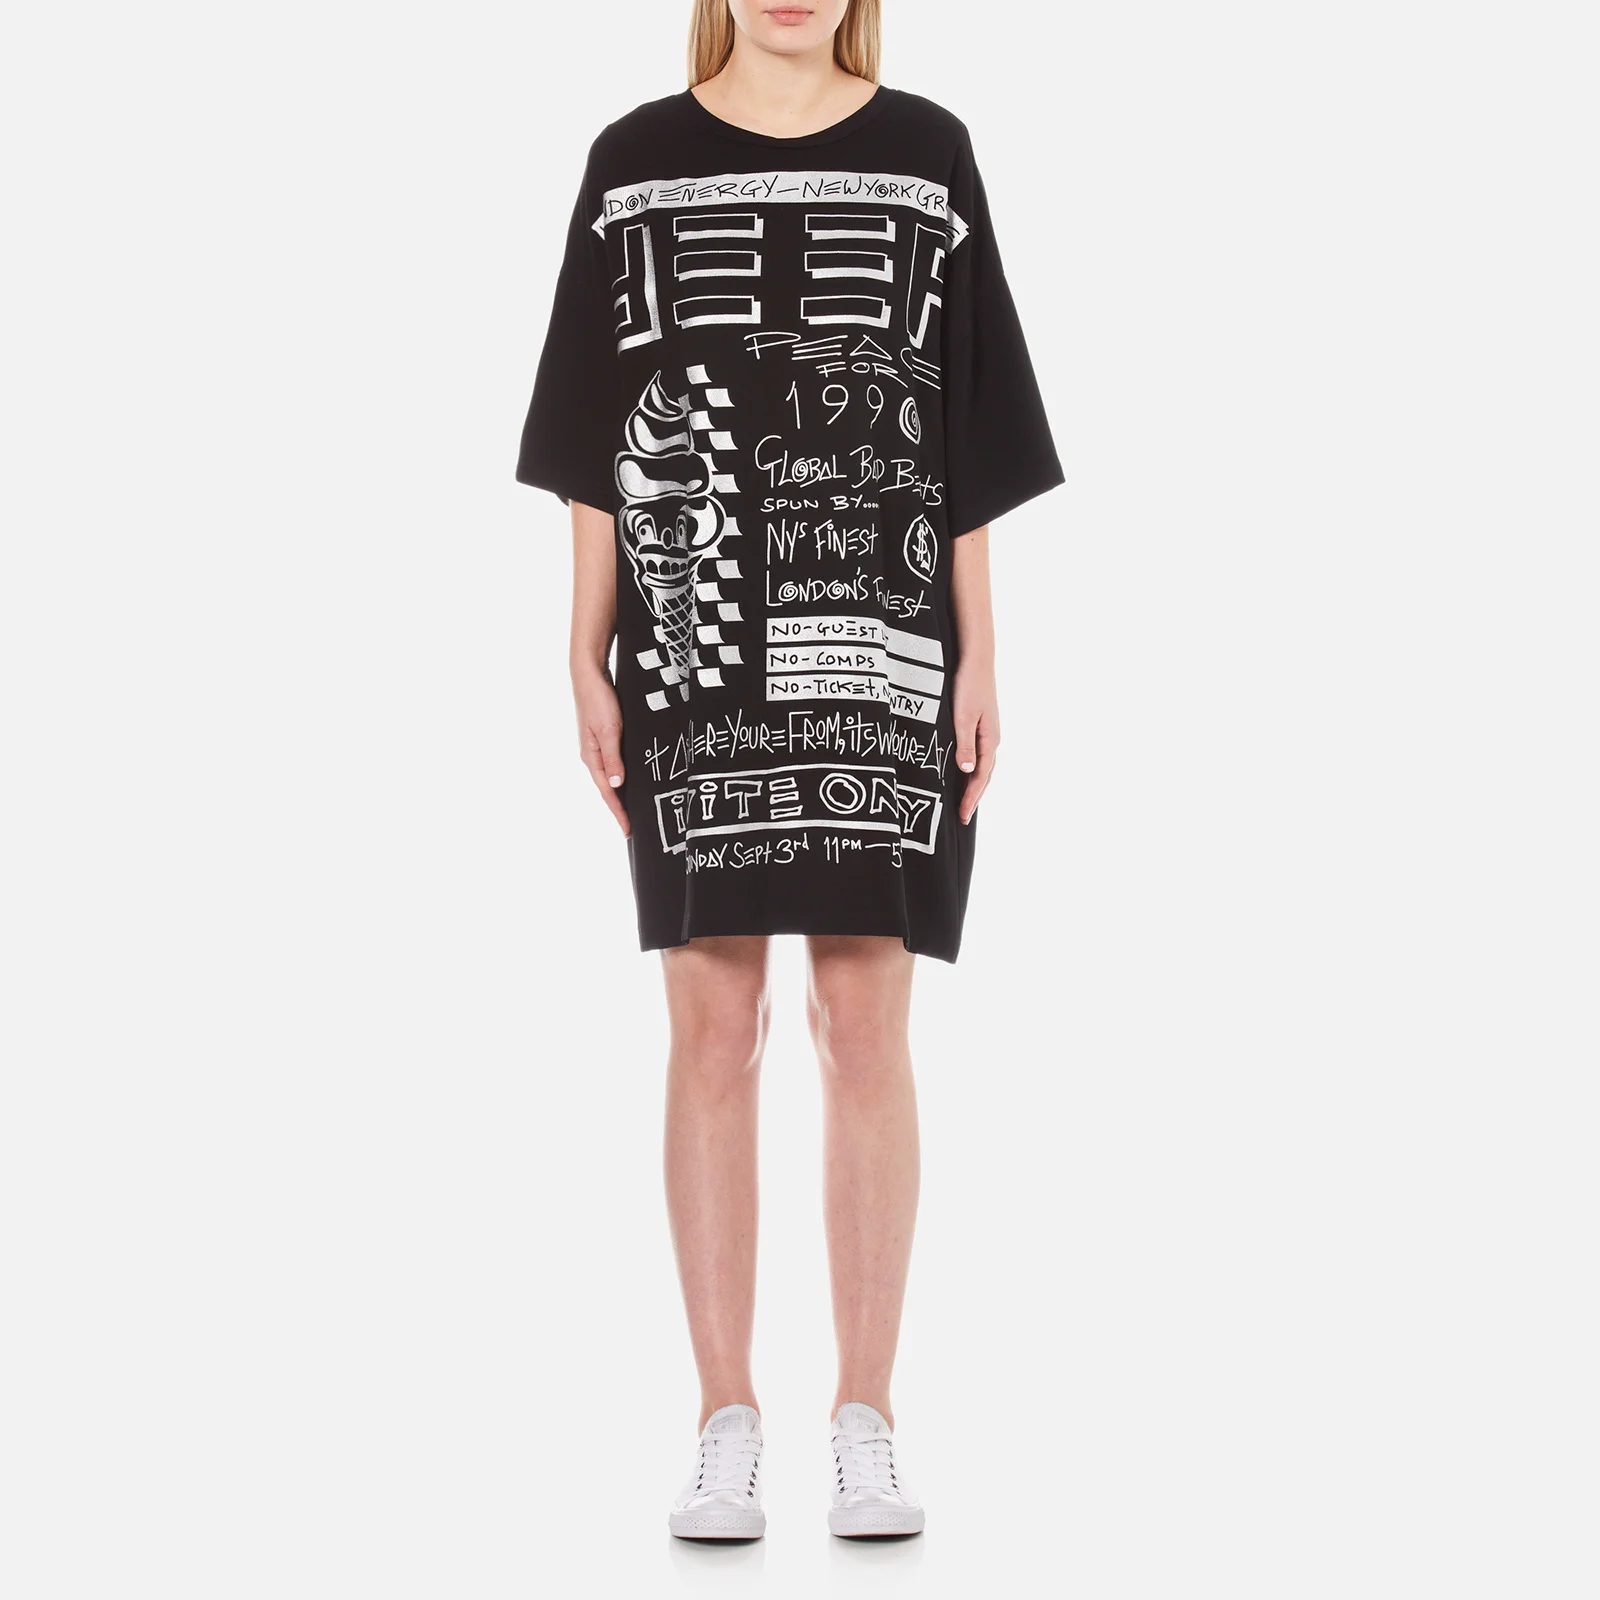 KENZO Women's Crepe Back Satin Flyer Print T-Shirt Dress - Black Image 1